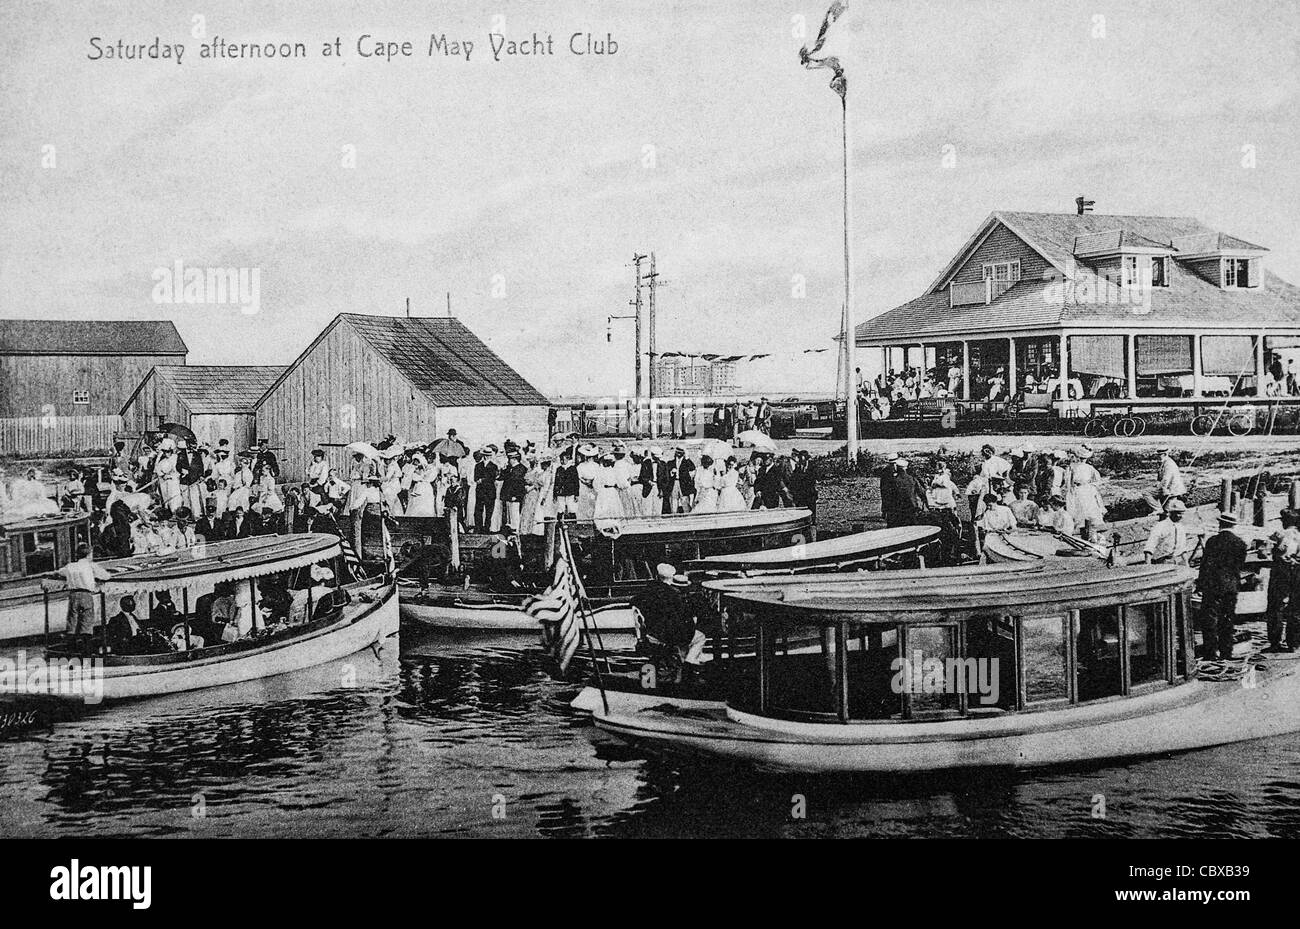 Sunday Afternoon at Cape May Yacht Club, Cape May, NJ circa 1920 Stock Photo